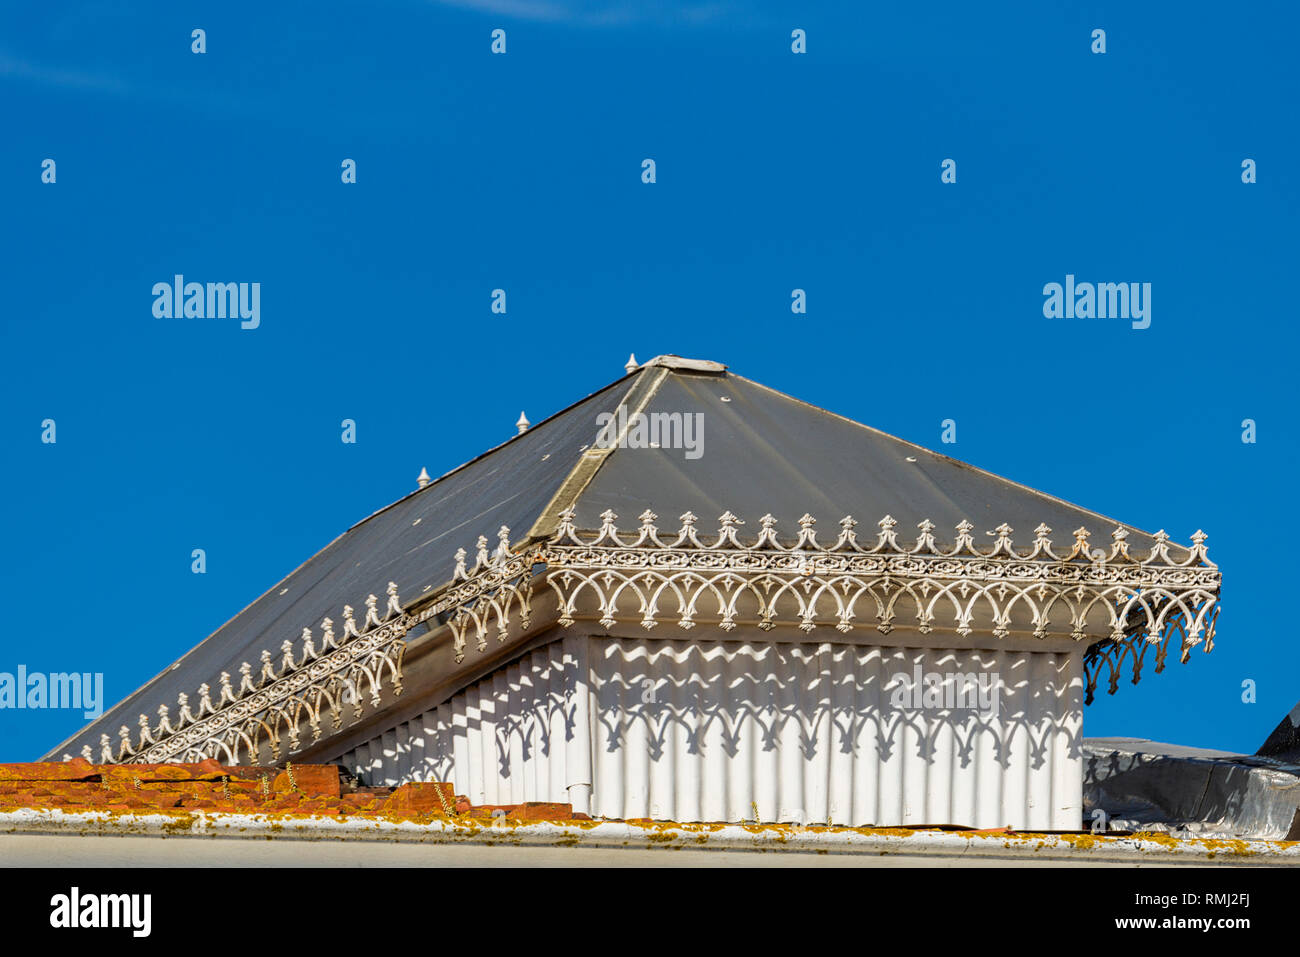 Distrito de alcantara fotografías e imágenes alta resolución - Alamy